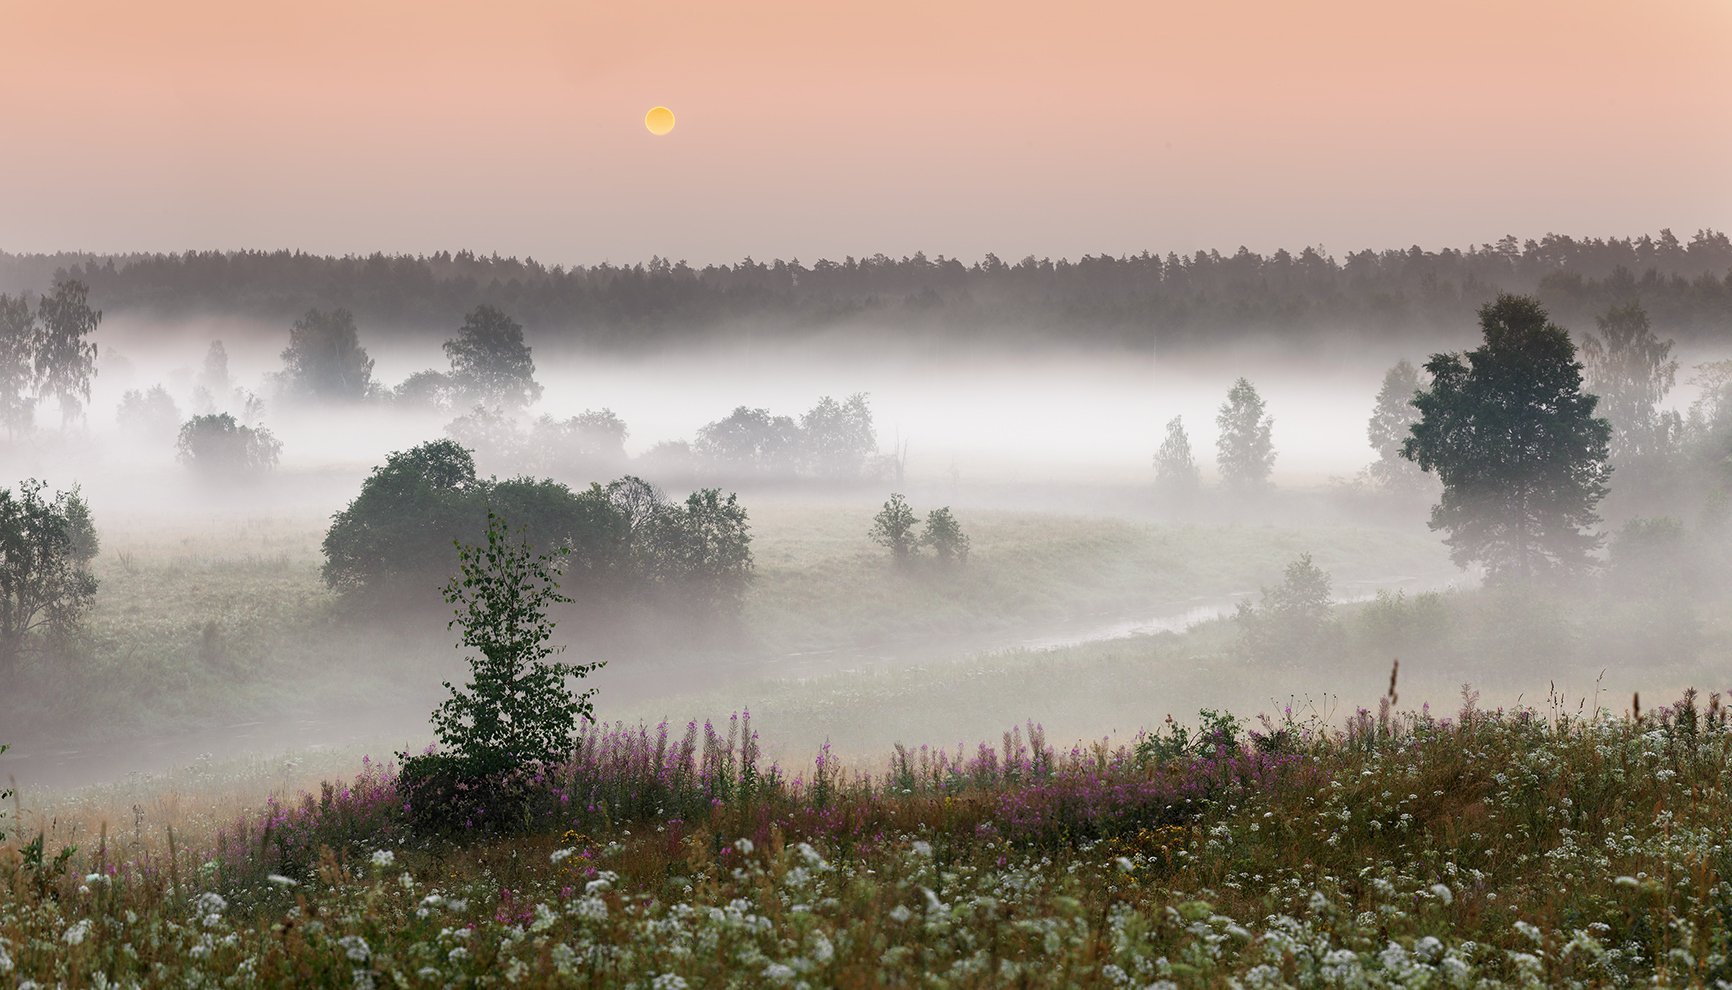 Пелена воды. Асафатов - туман. Кенозерский национальный парк рассвет туман. Рассветный туман на Каменке. Суздаль.. Туманное утро Фет.